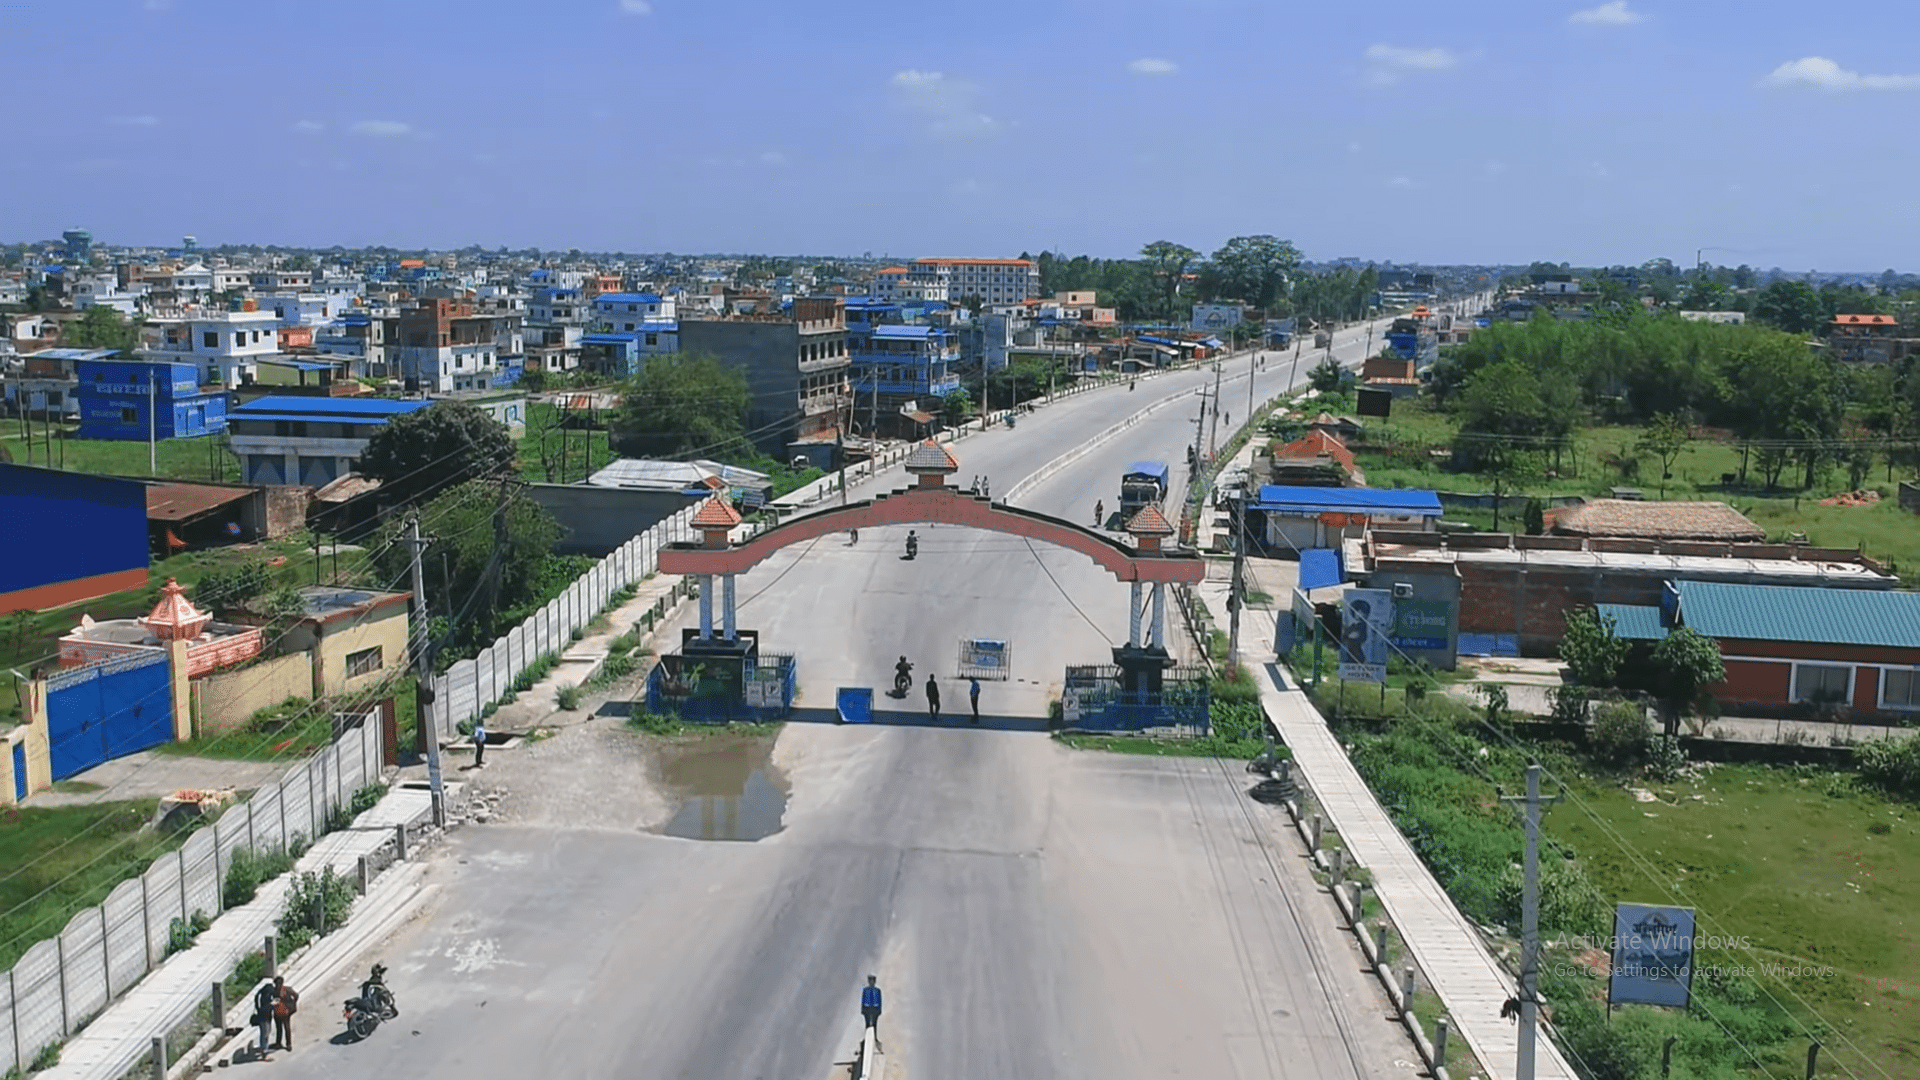 Biratnagar: The Industrial Hub of Nepal